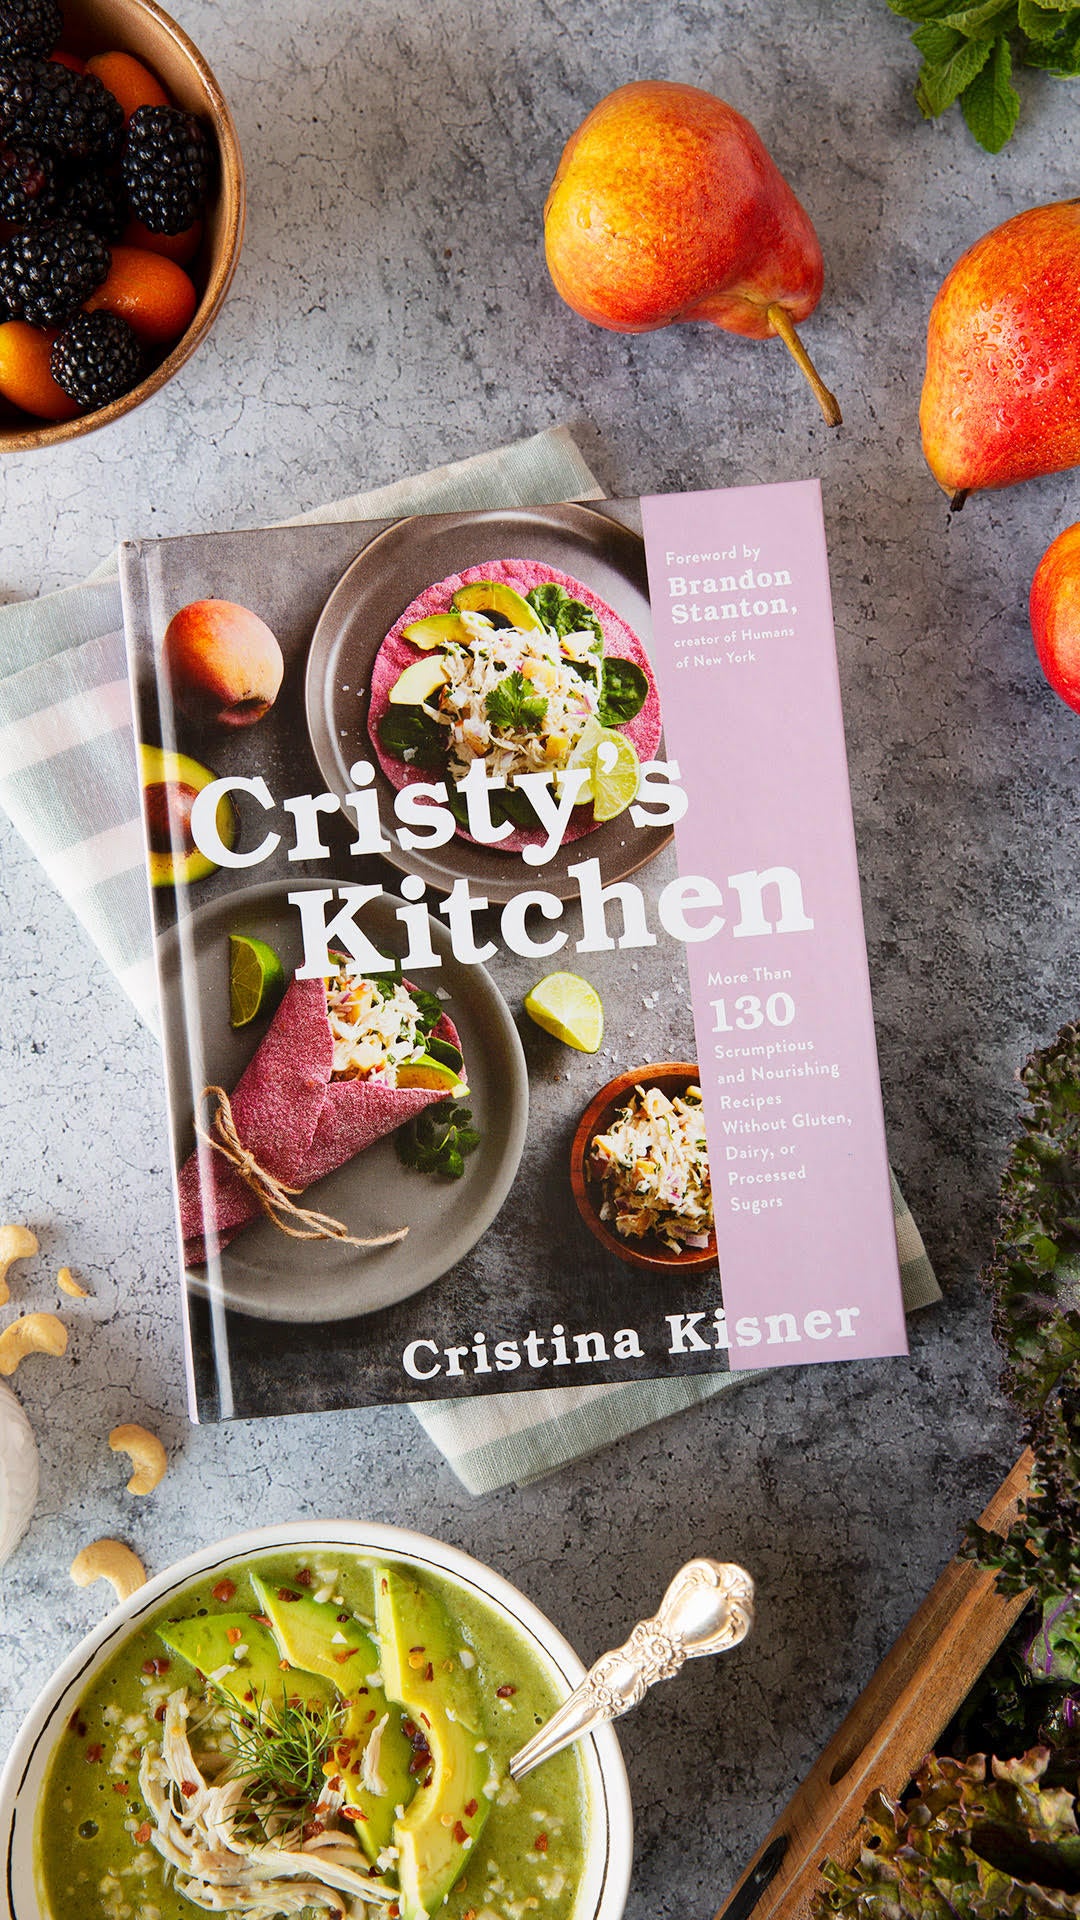 Cristy's Kitchen Cookbook - Signed